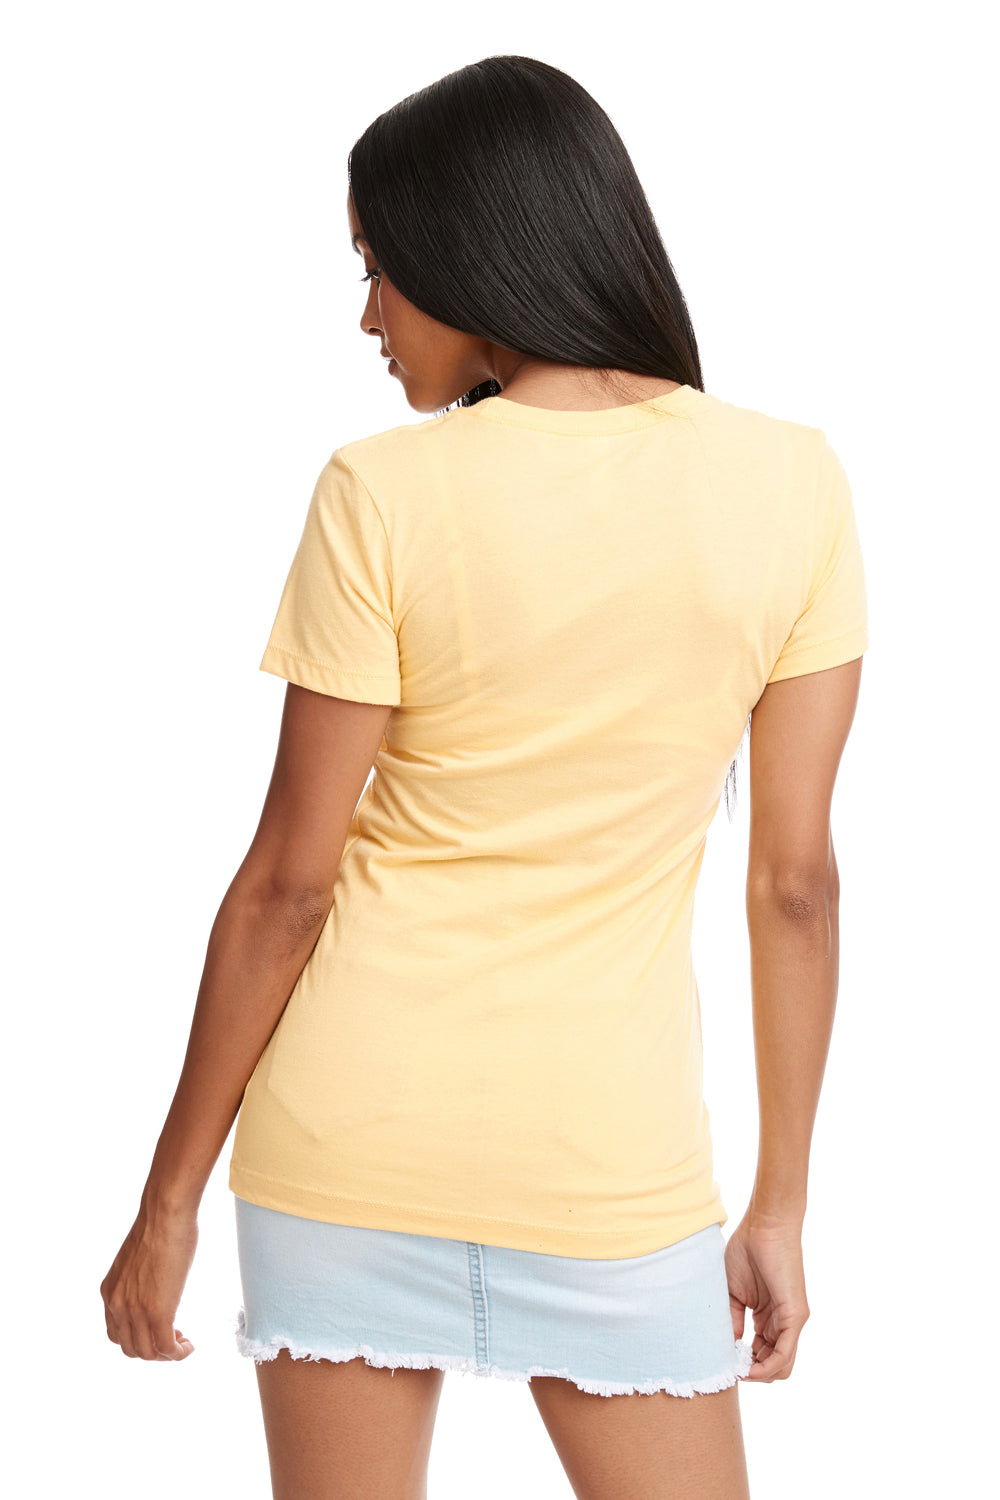 Next Level N1510 Womens Ideal Jersey Short Sleeve Crewneck T-Shirt Yellow Back